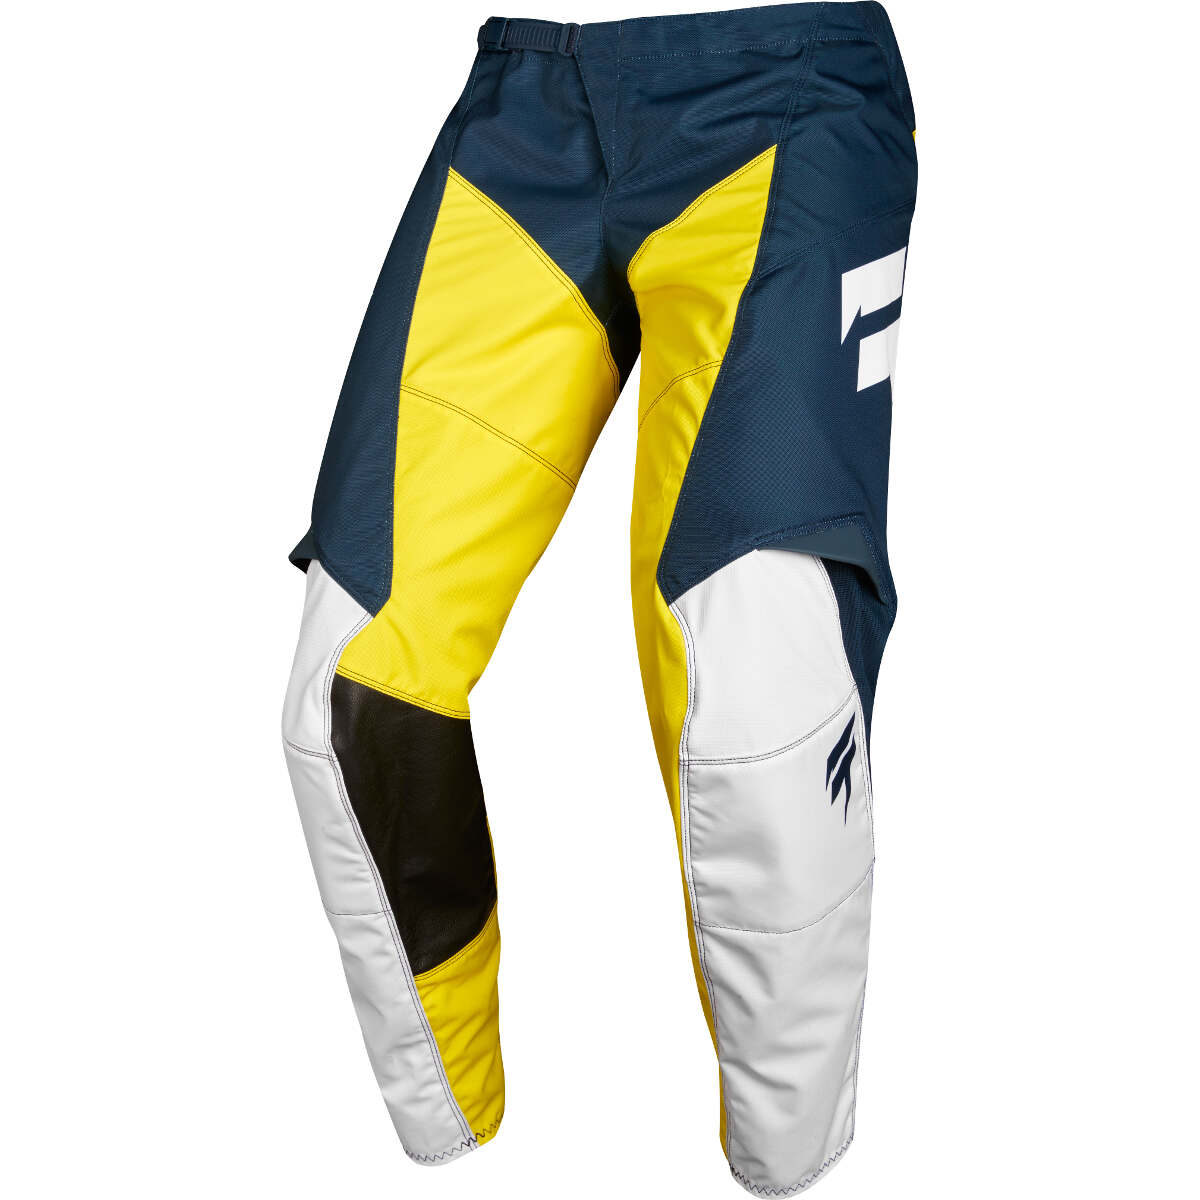 Shift Pantaloni MX Whit3 Label Navy/Yellow - Limited Edition GP